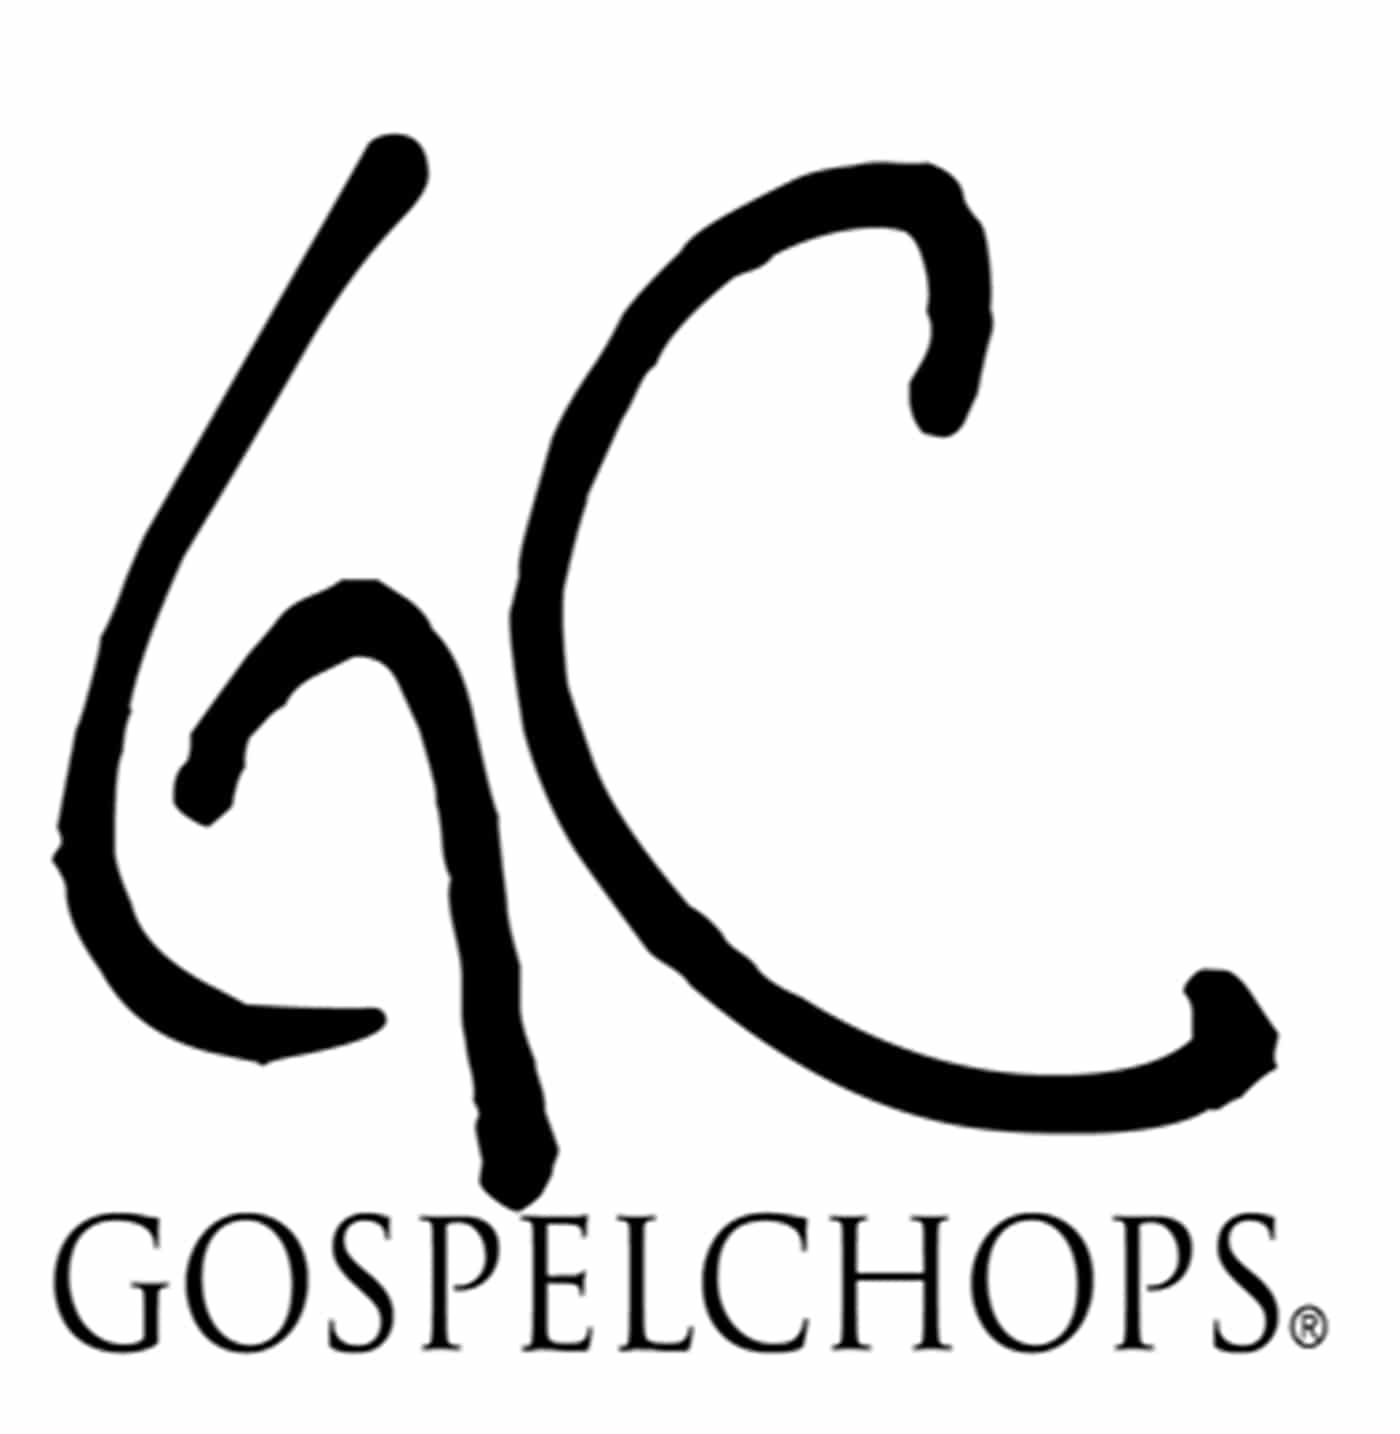 GospelChops - Best Drummers in the World Play Gospel Music